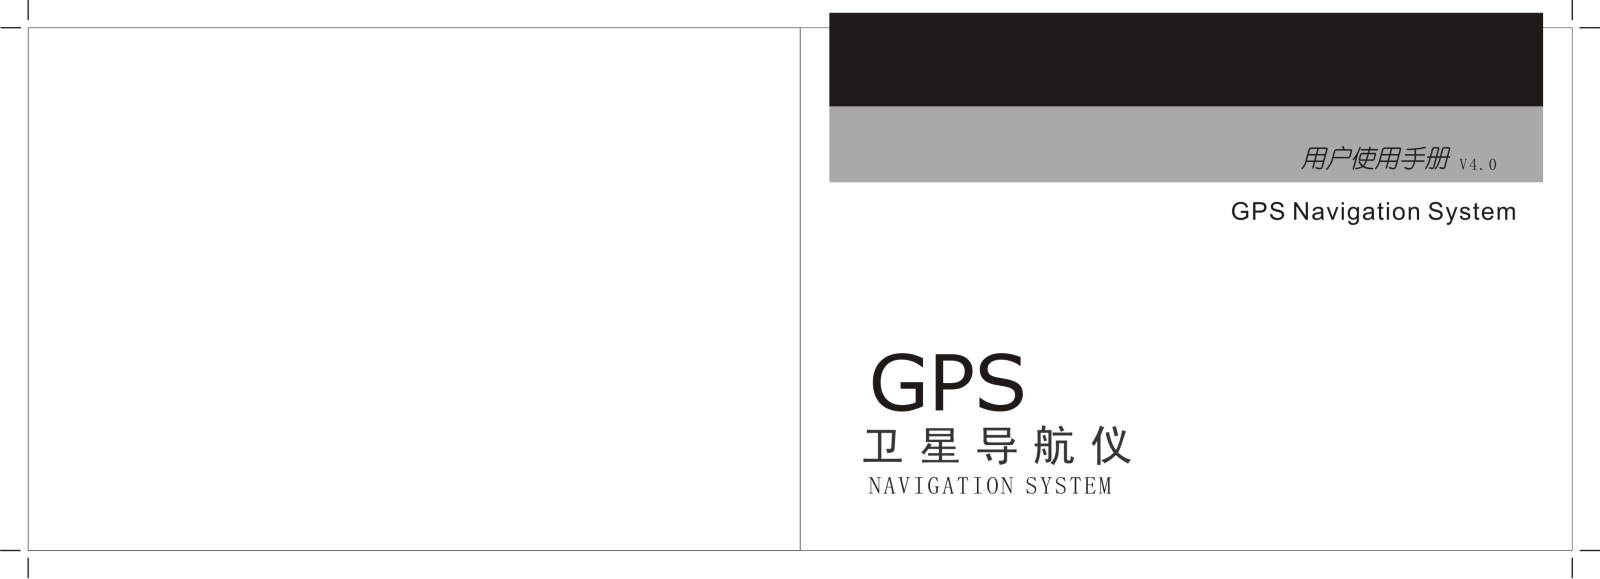 GPS NAVIGATION SYSTEM User Manual